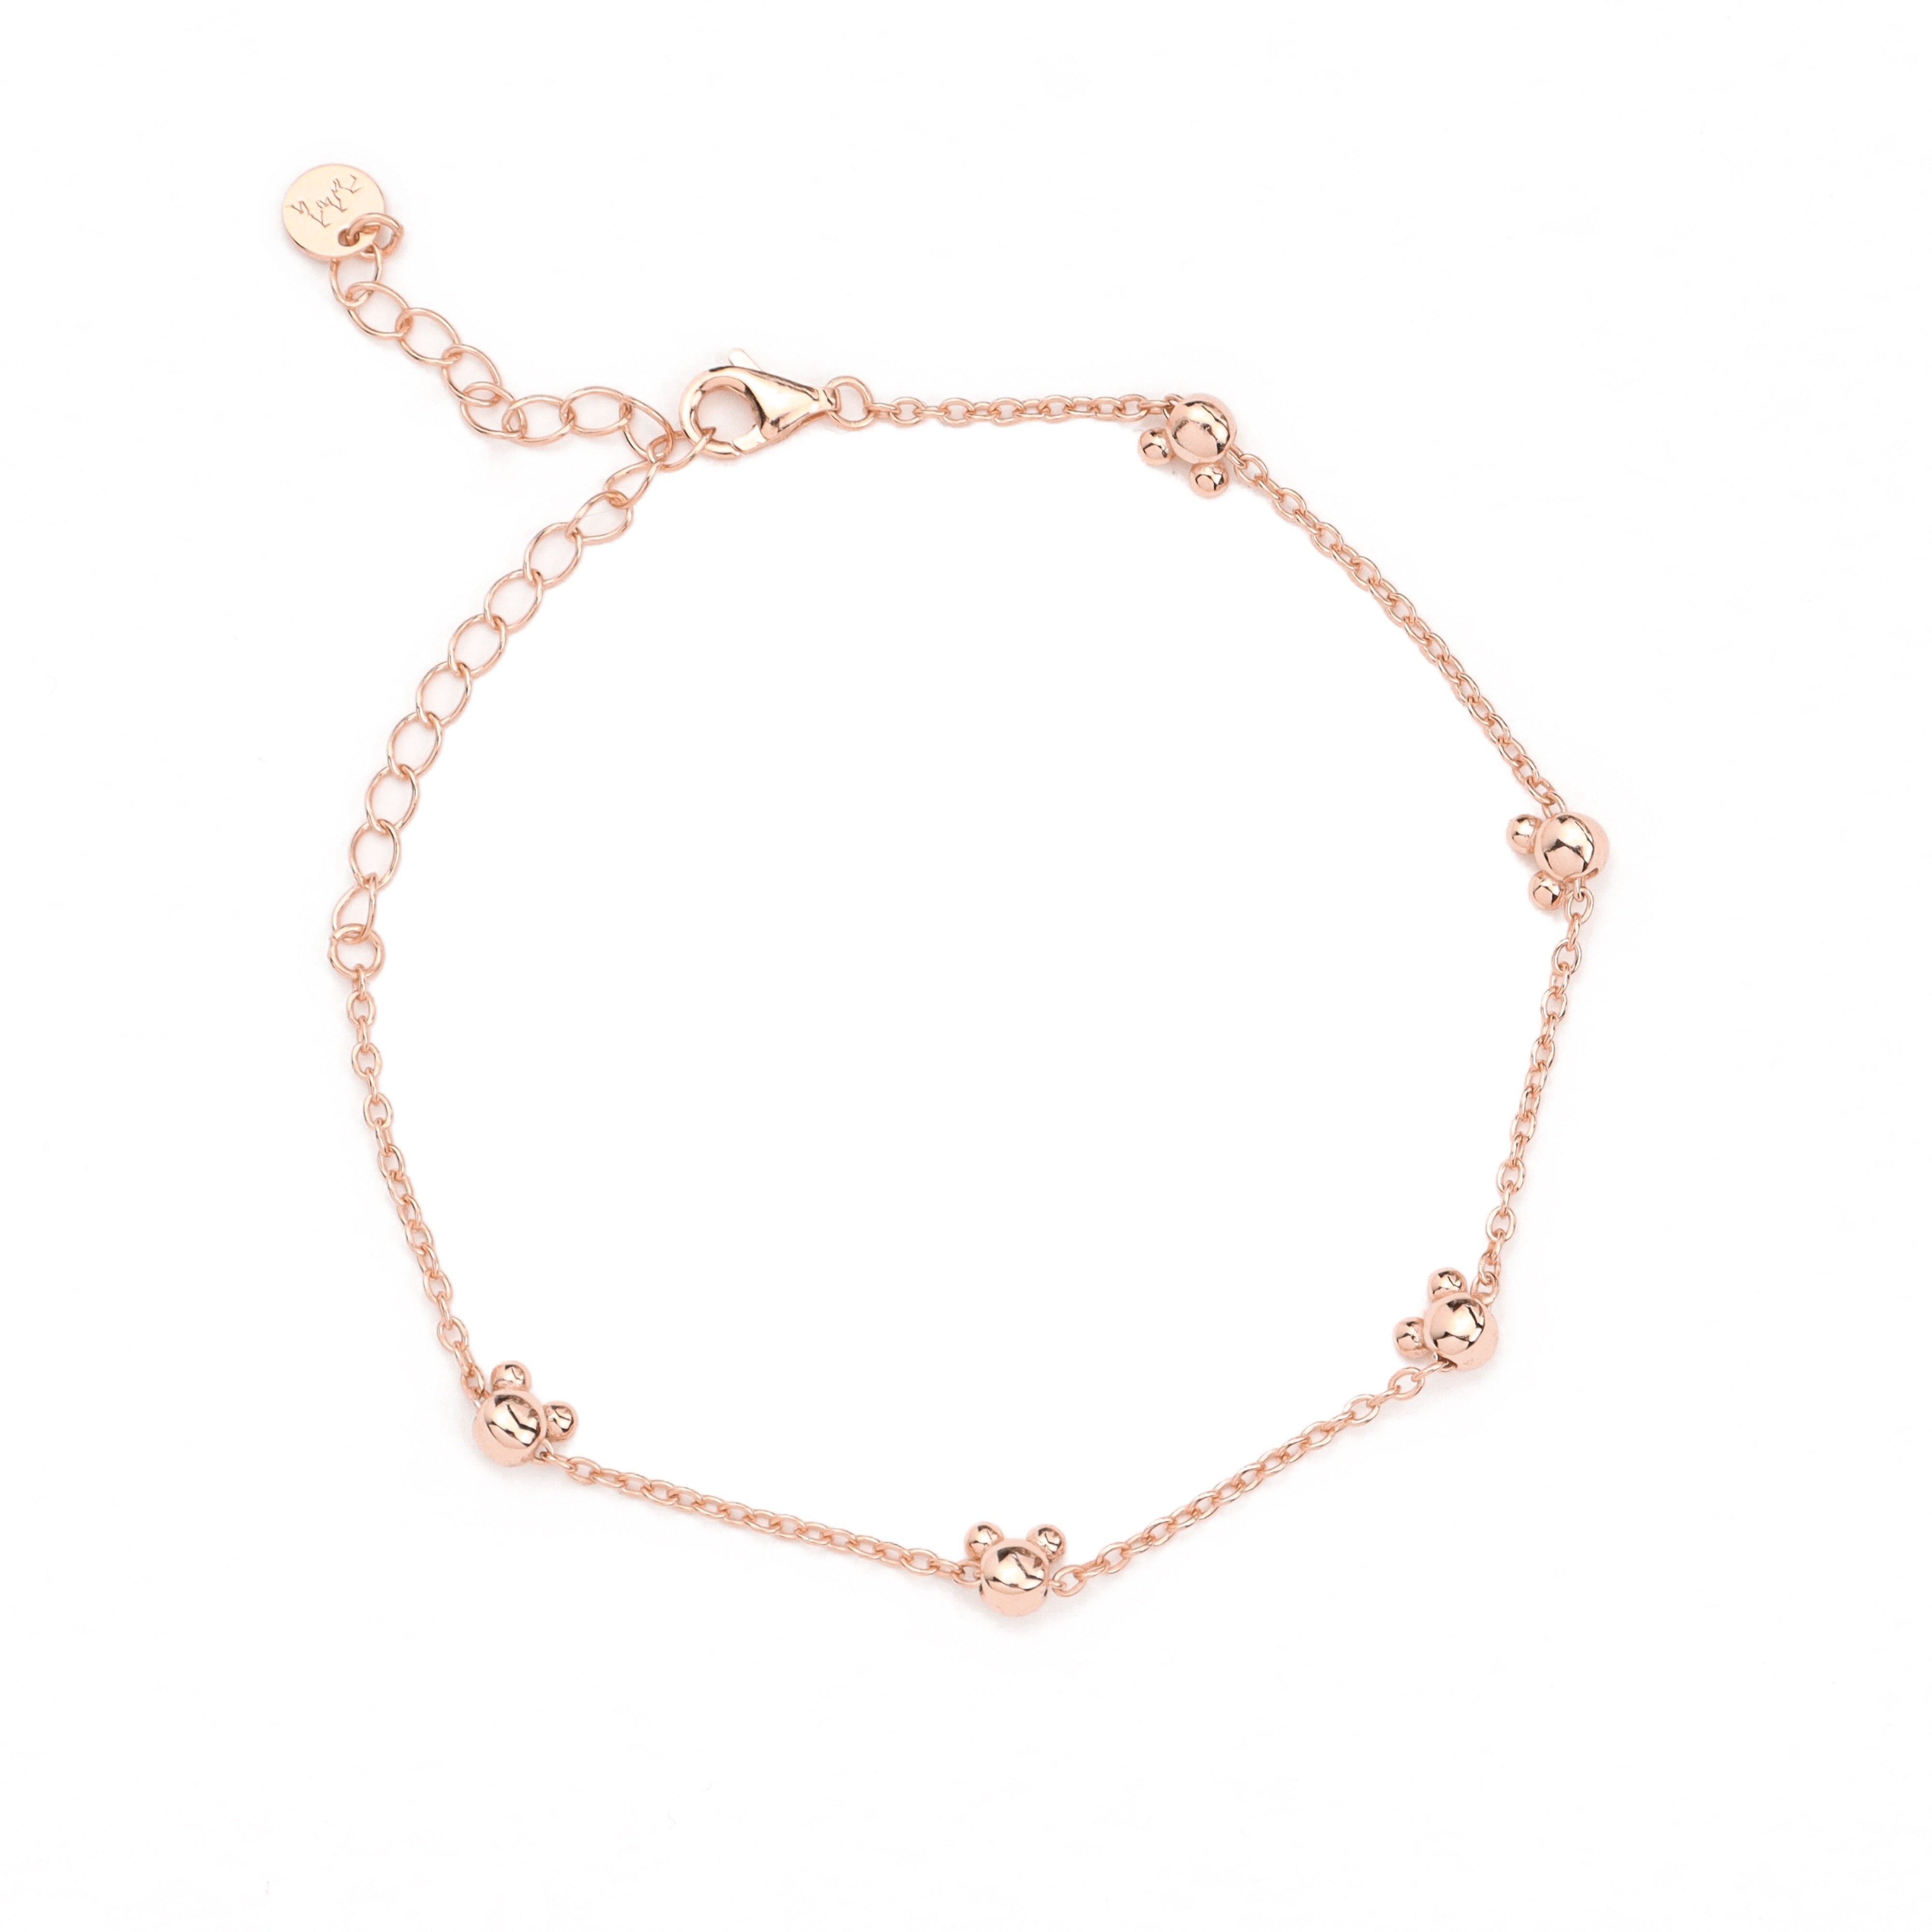 Bracelet ~ Sterling Collection ~ Beaded Chain Bracelet